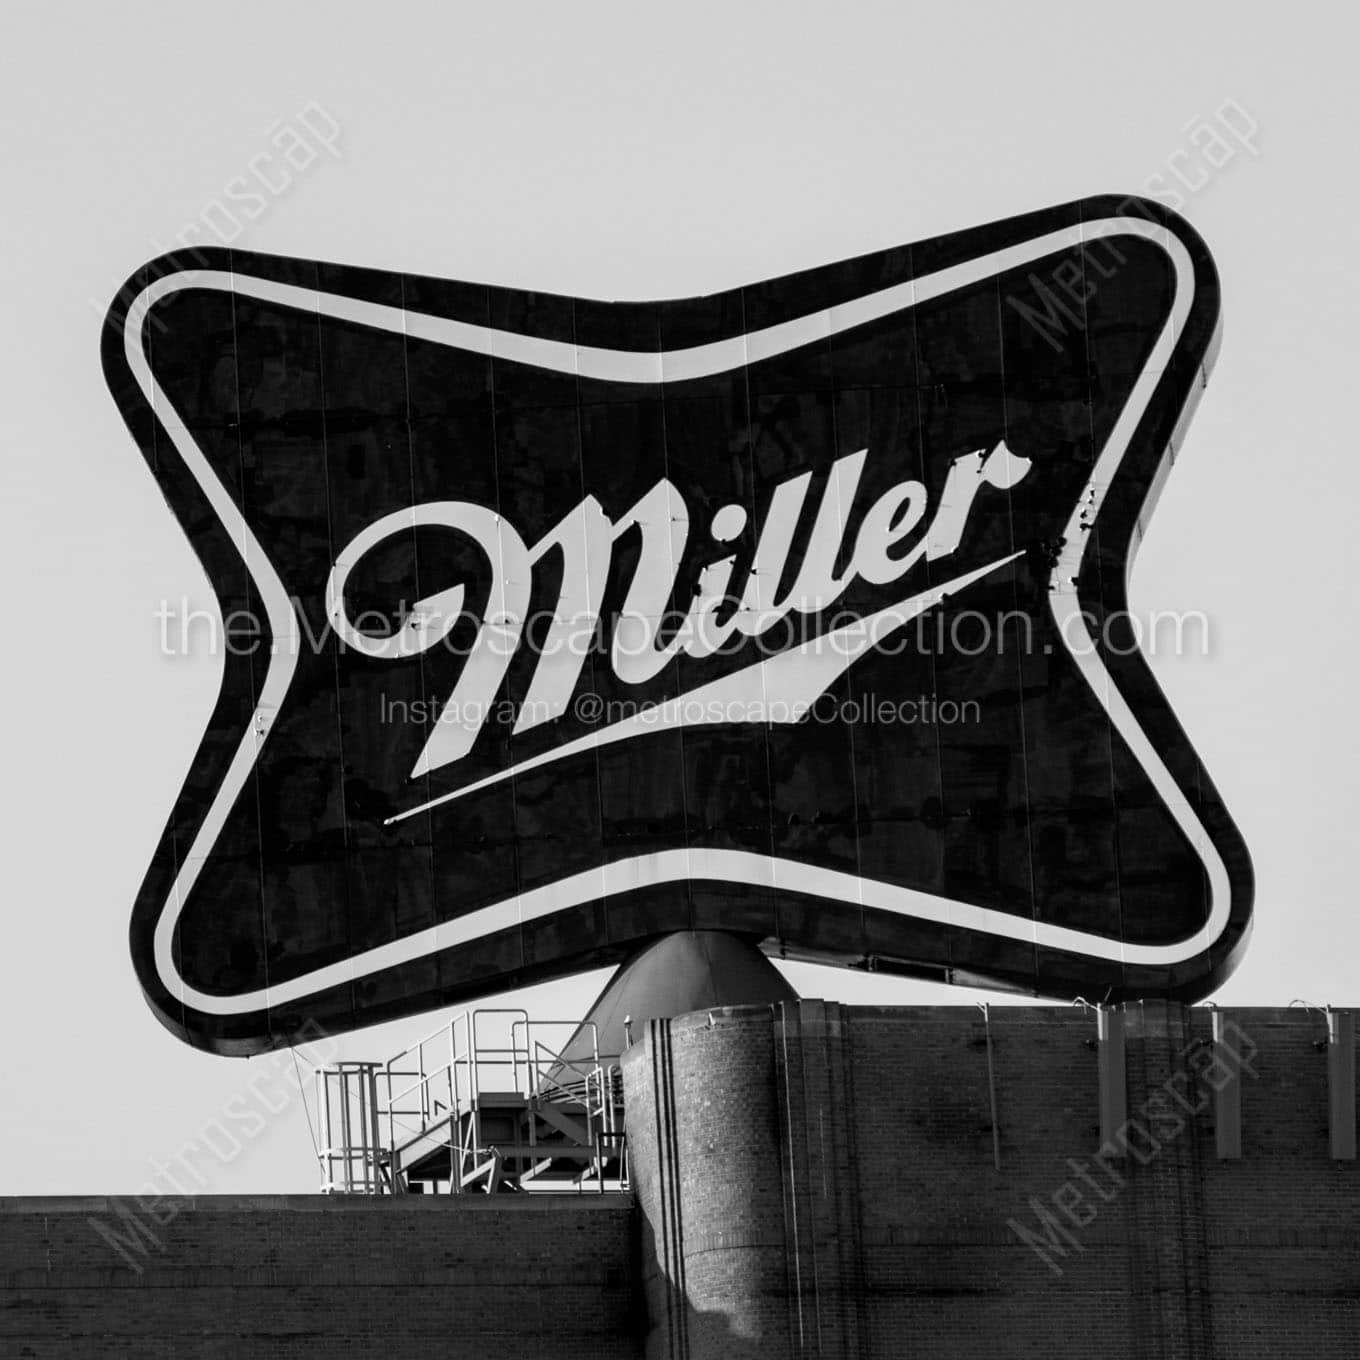 miller brewery sign Black & White Office Art